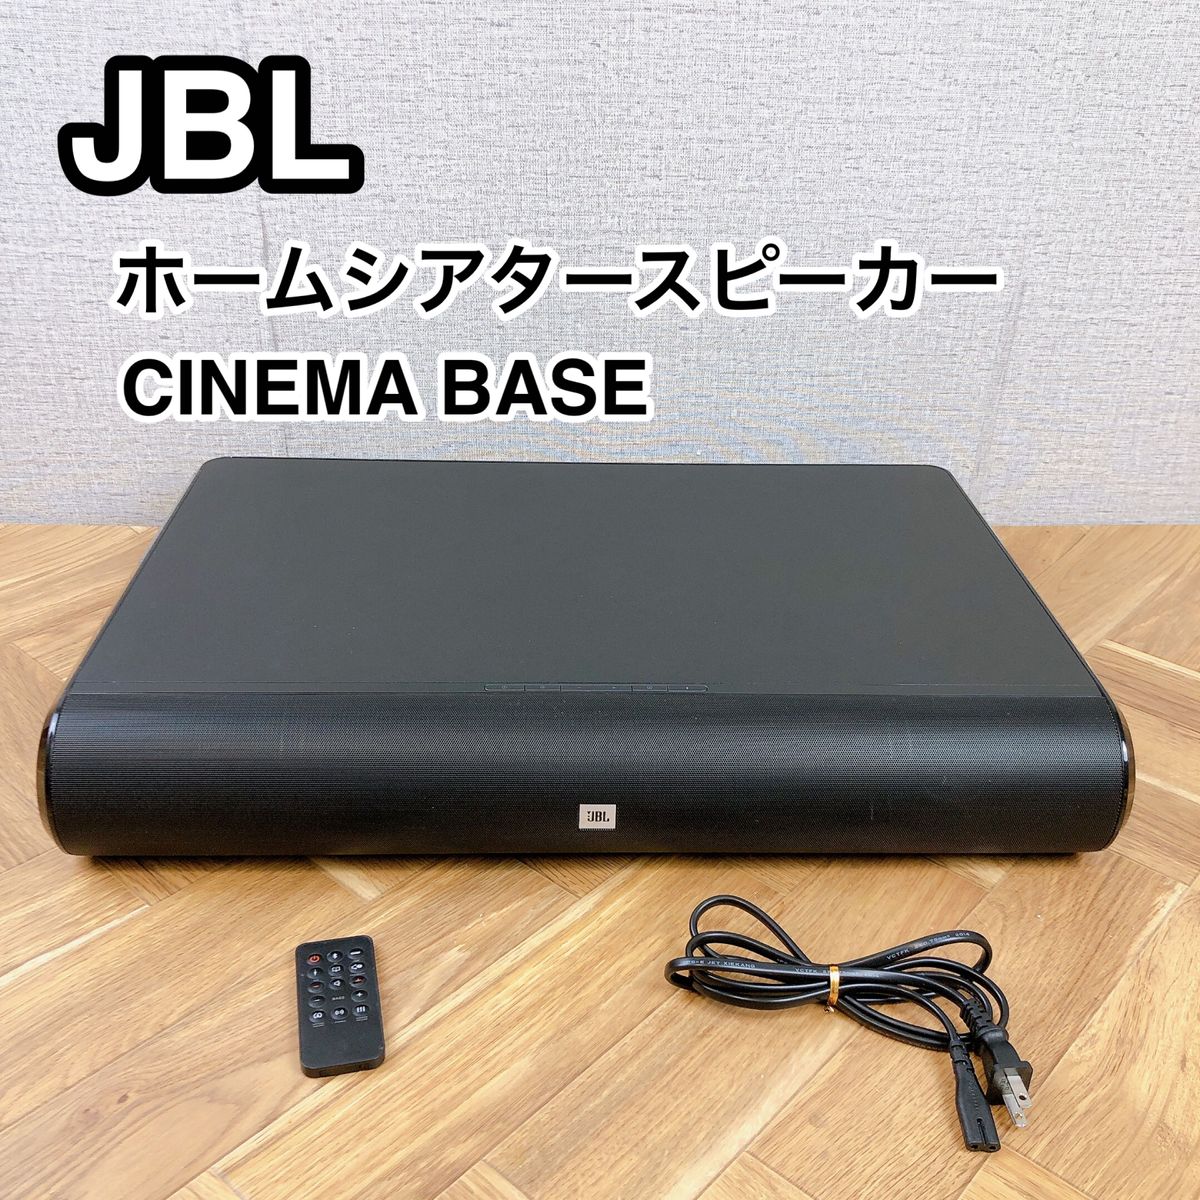 JBL ジェービーエル ホームシアタースピーカー CINEMA BASE